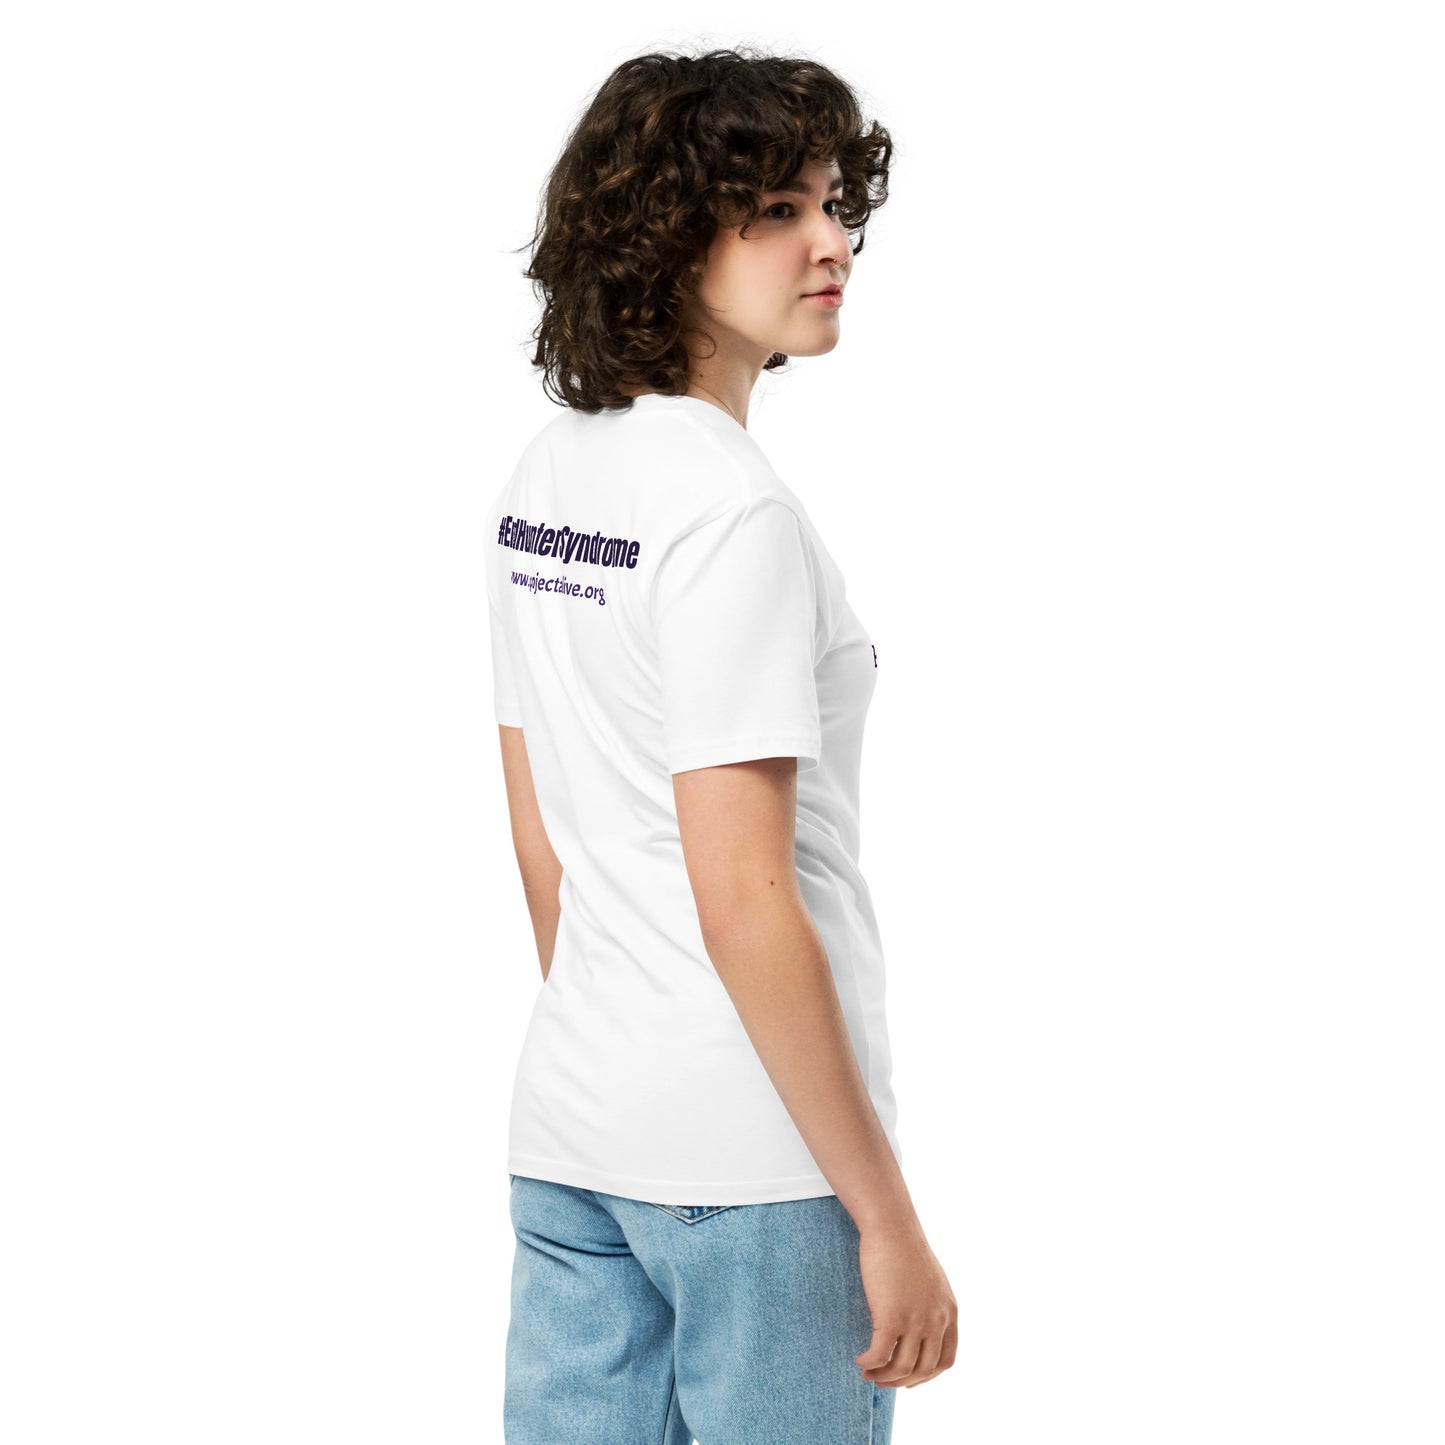 Unisex premium t-shirt PA Logo